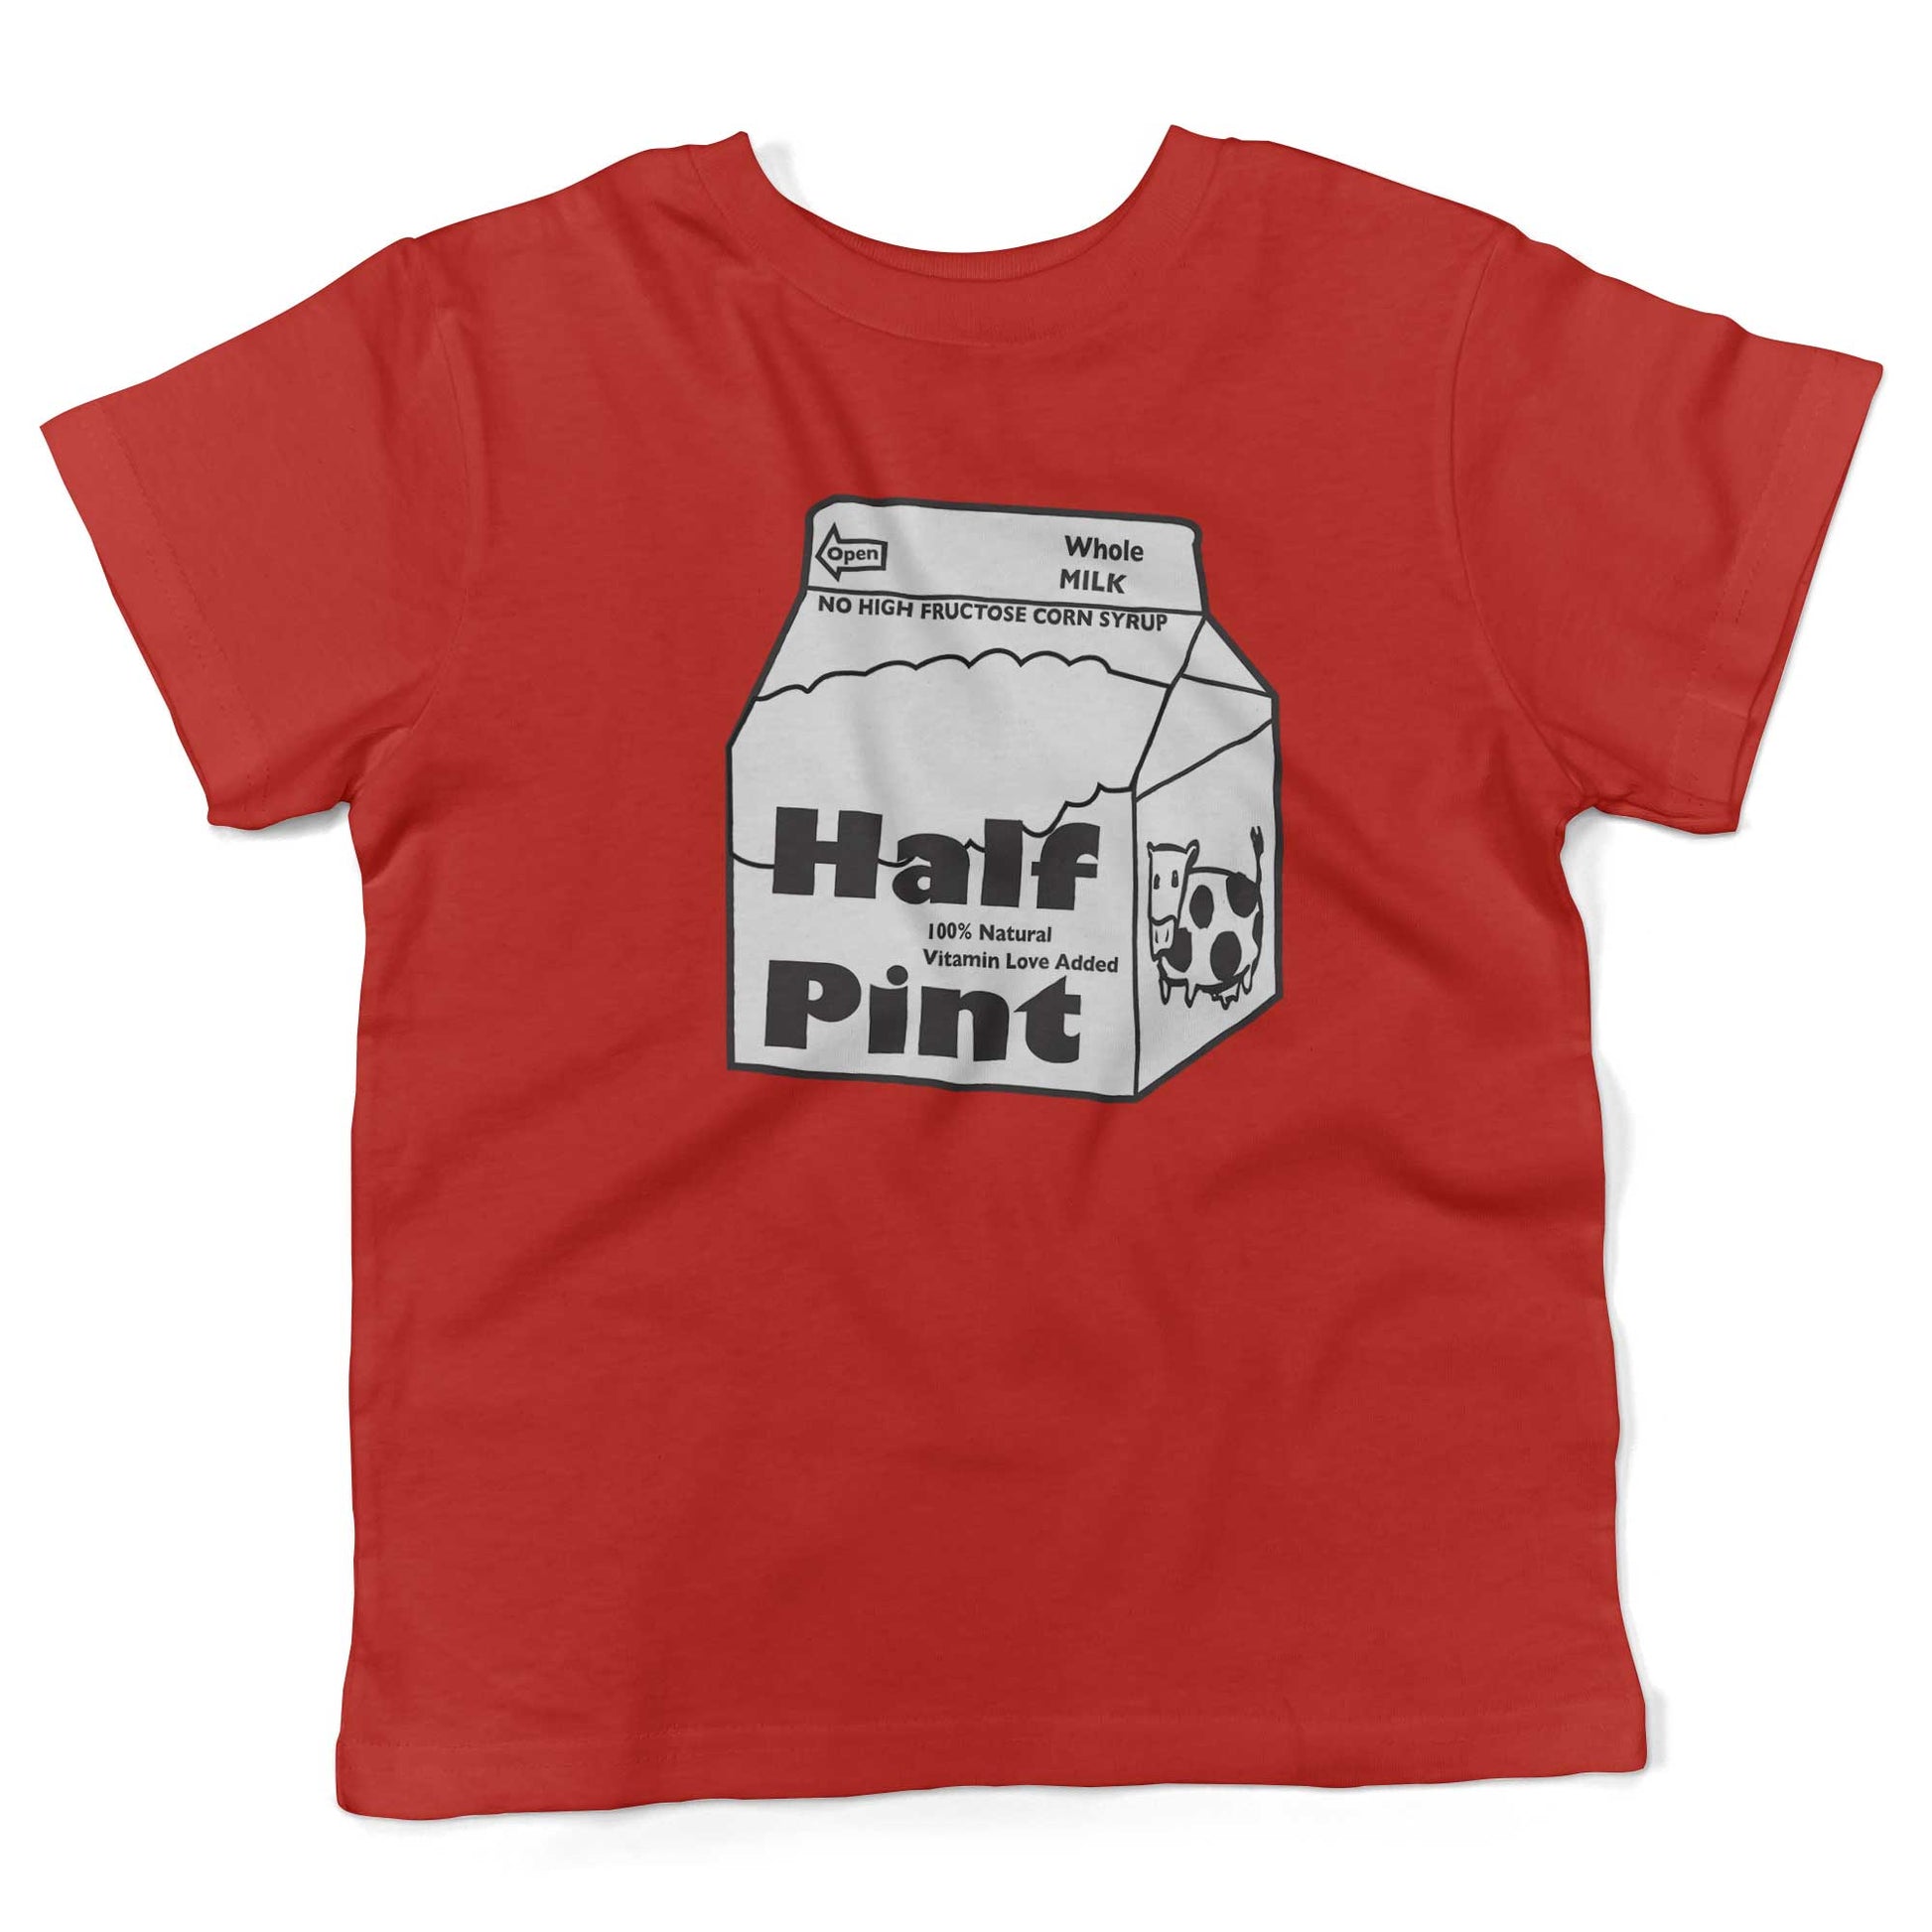 Half Pint Of Milk Toddler Shirt-Red-2T